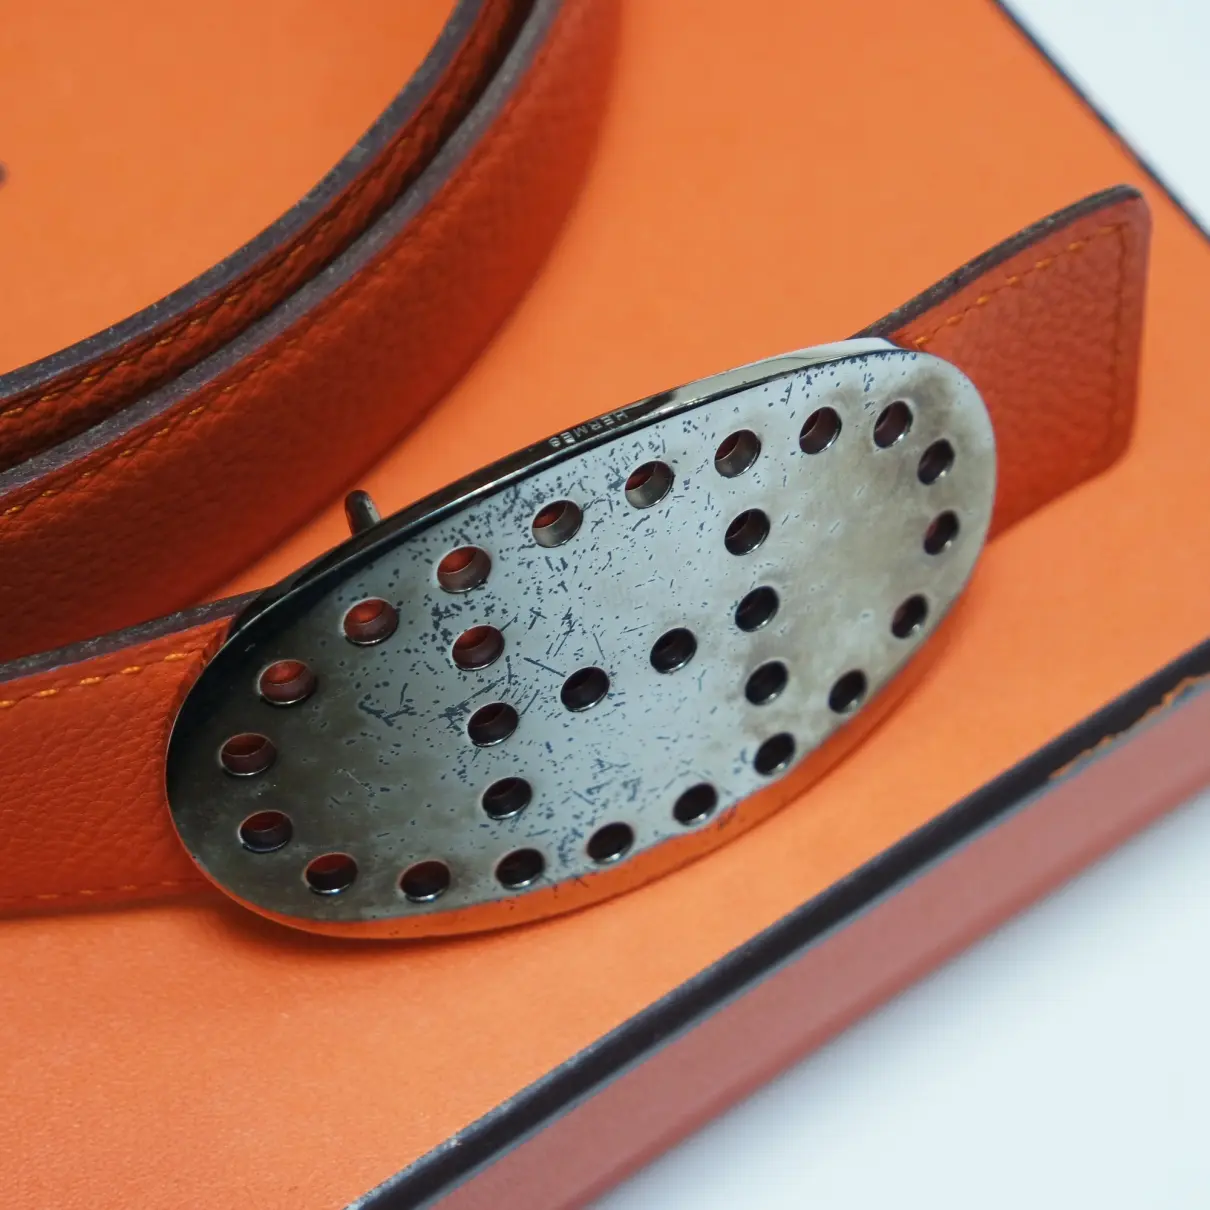 Boucle seule / Belt buckle leather belt Hermès